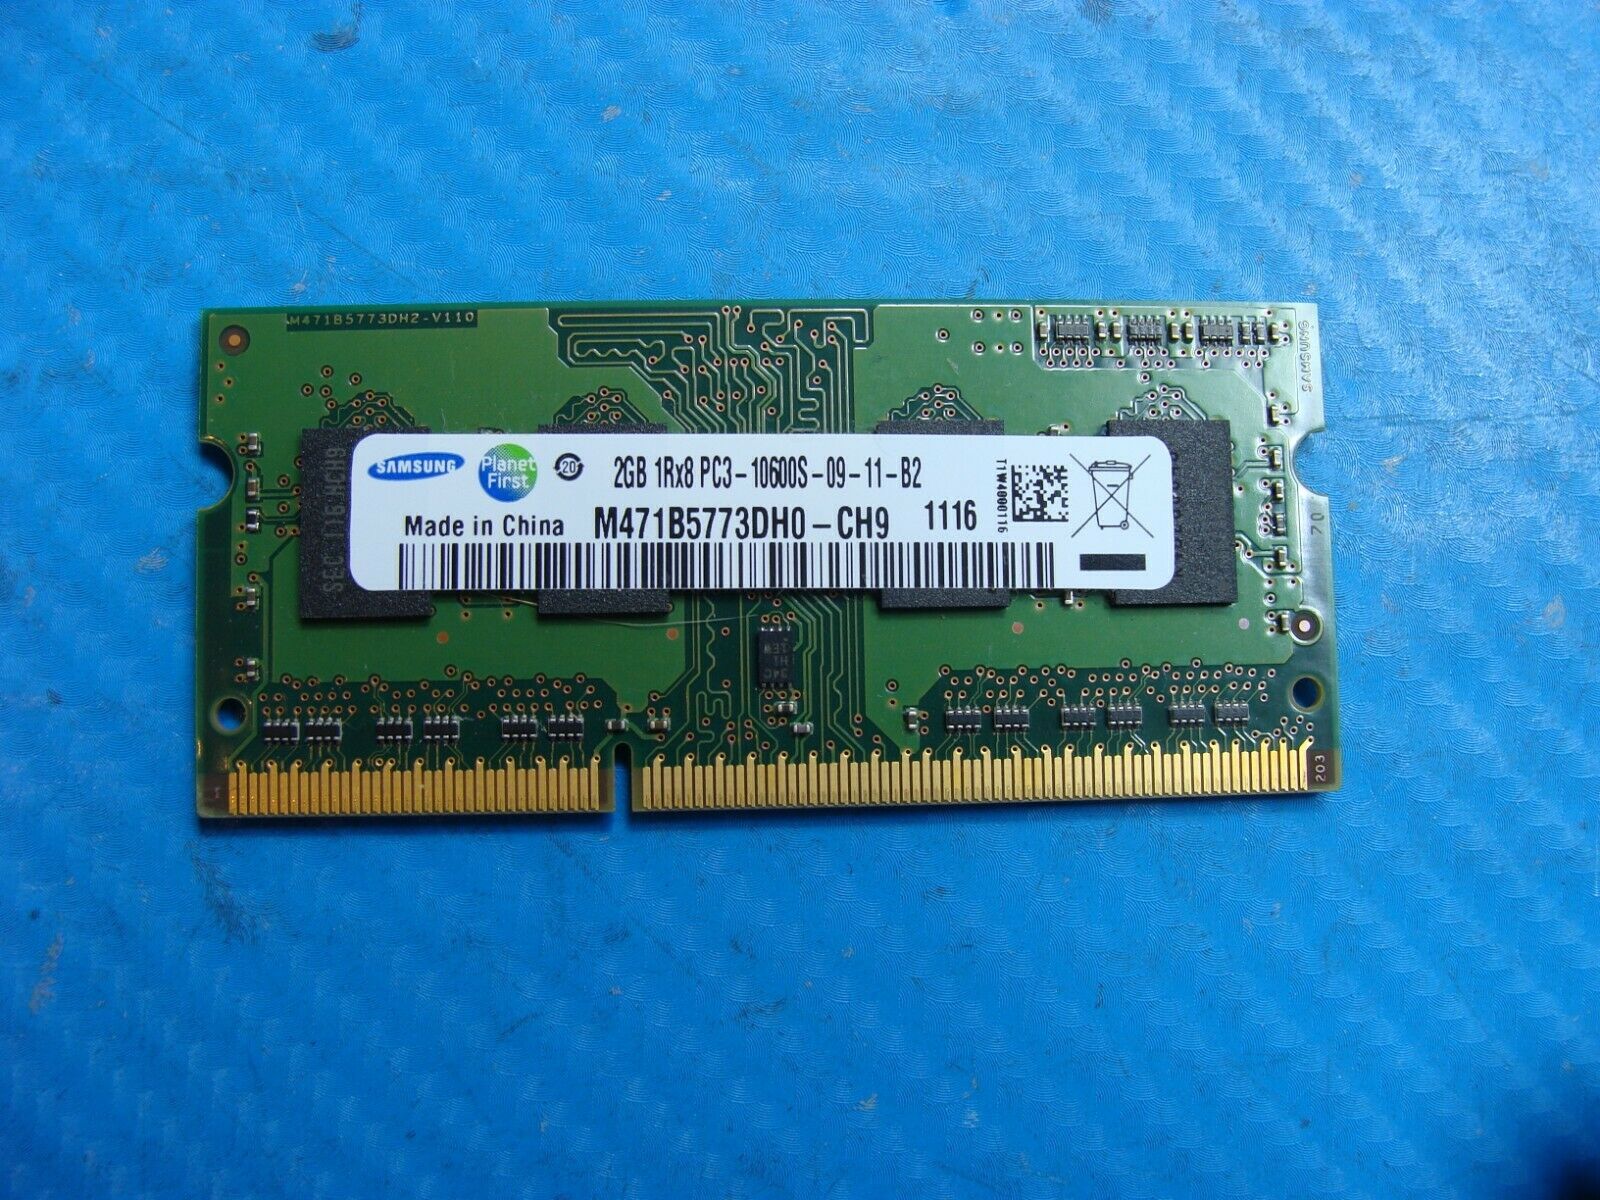 MacBook Pro A1278 Samsung 2GB PC3-10600S SO-DIMM RAM Memory M471B5773DH0-CH9 Samsung